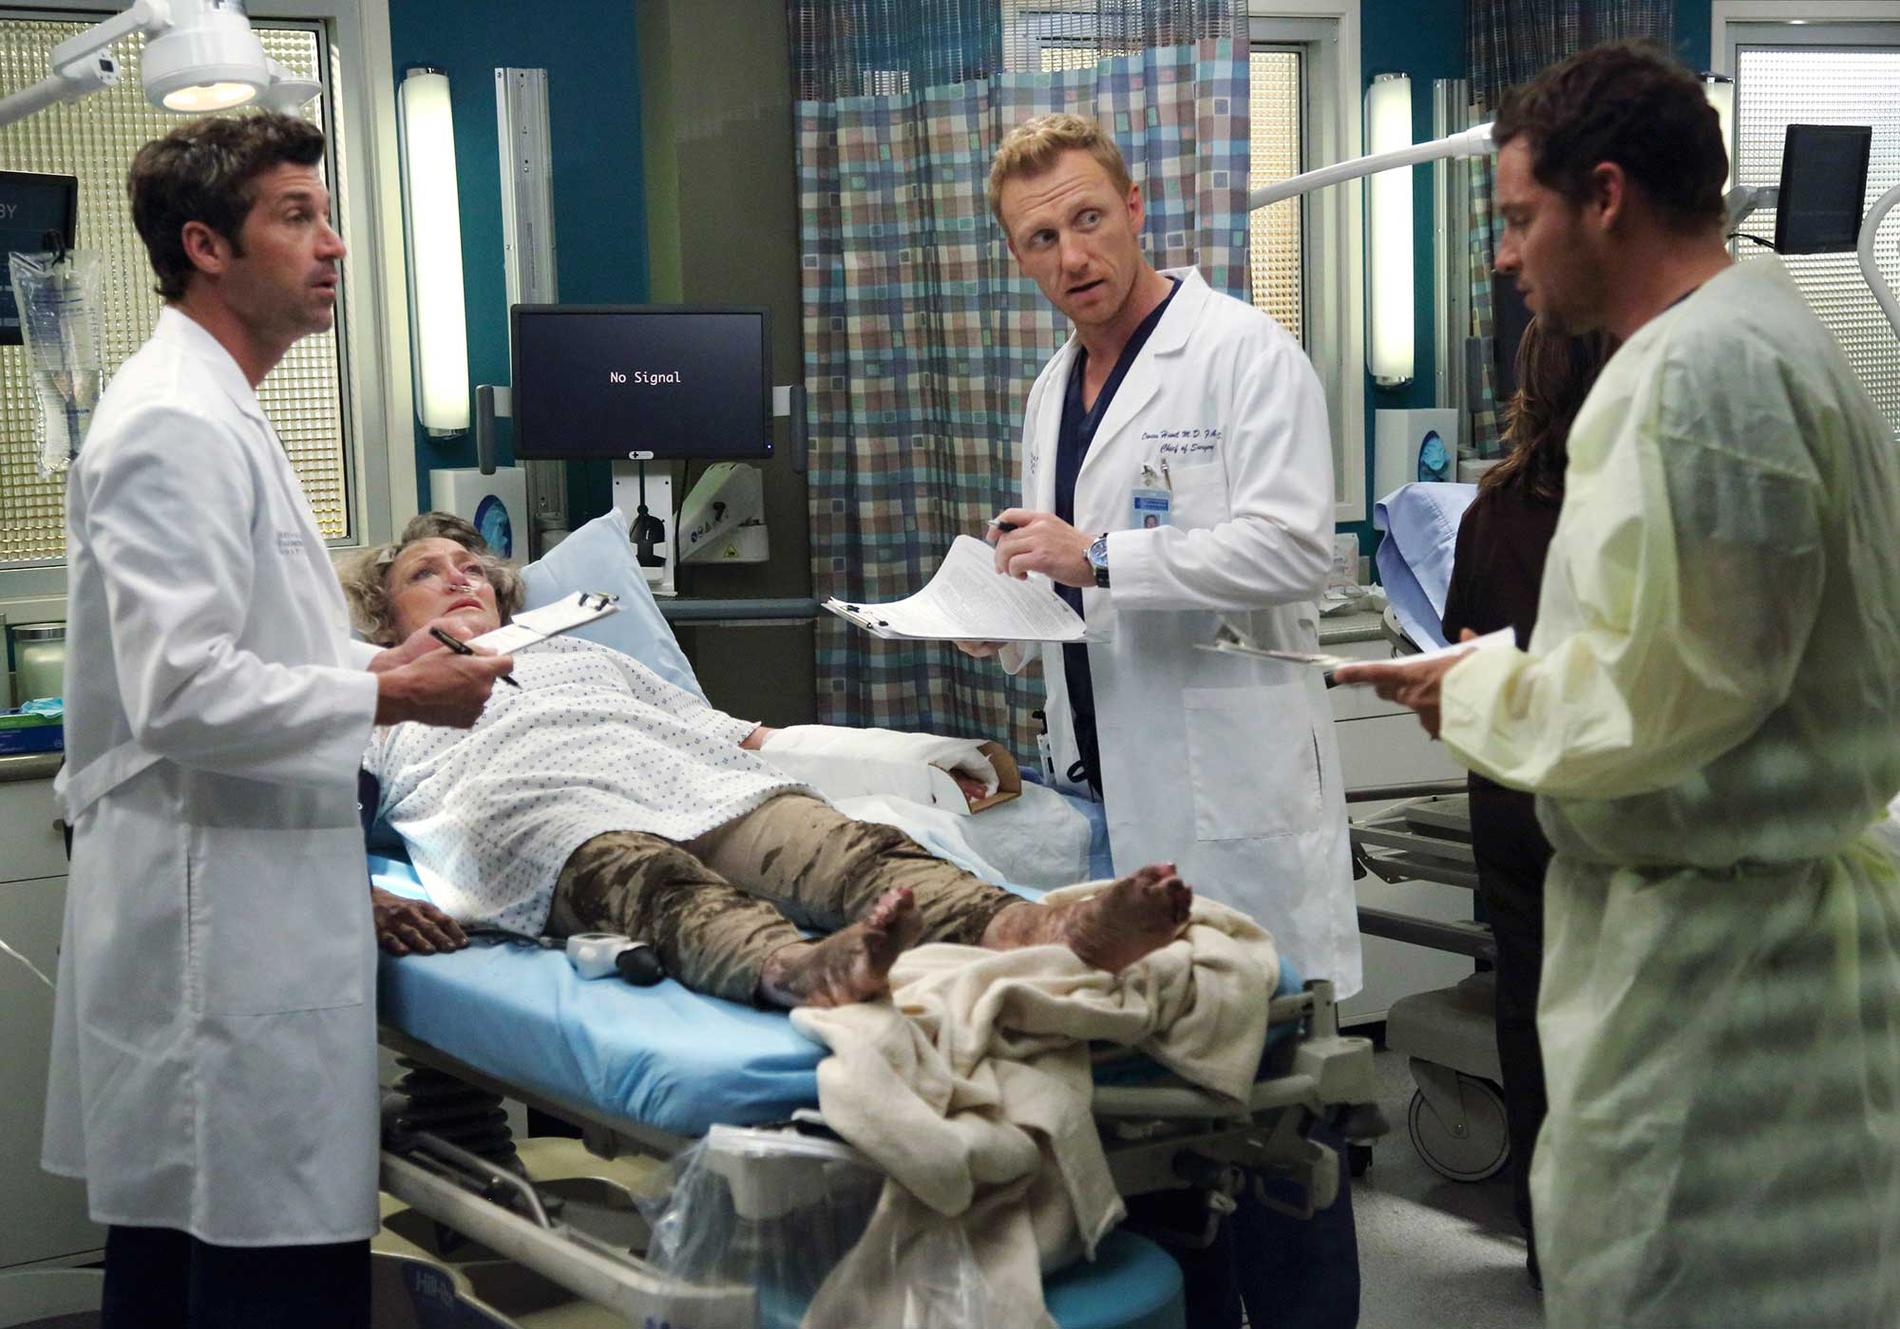 Scen ur ”Grey's anatomy”. Patrick Dempsey,  Kevin McKidd och Justin Chambers.